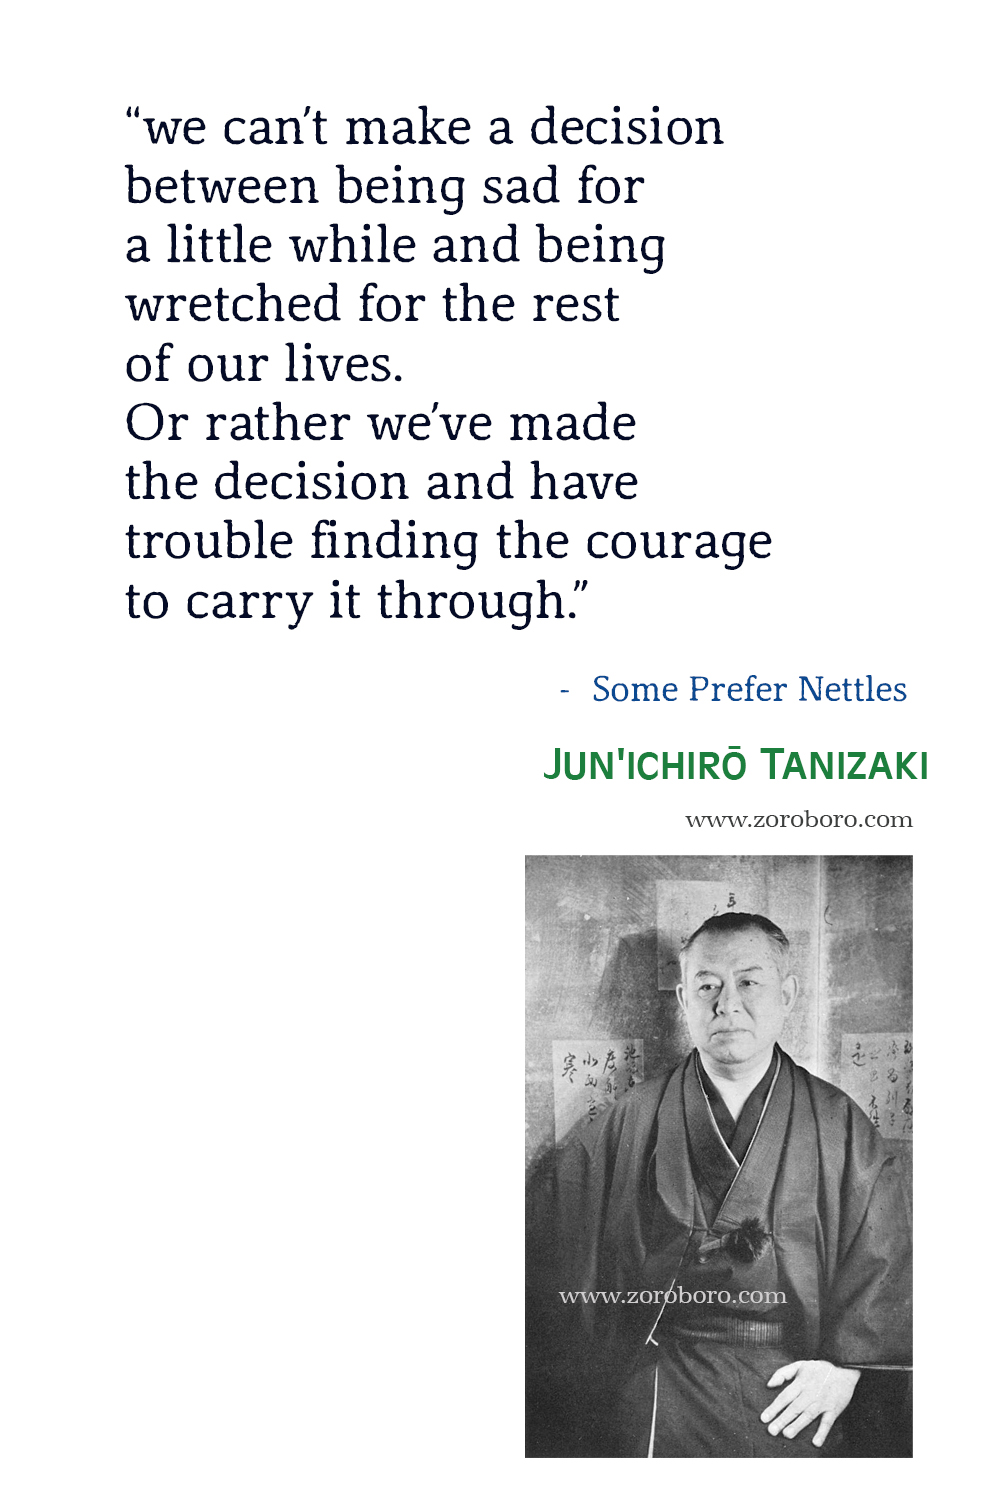 Junichiro Tanizaki Quotes, Junichiro Tanizaki In Praise of Shadows Quotes, Junichiro Tanizaki Books, Jun'ichirō Tanizaki Some Prefer Nettles Quotes.